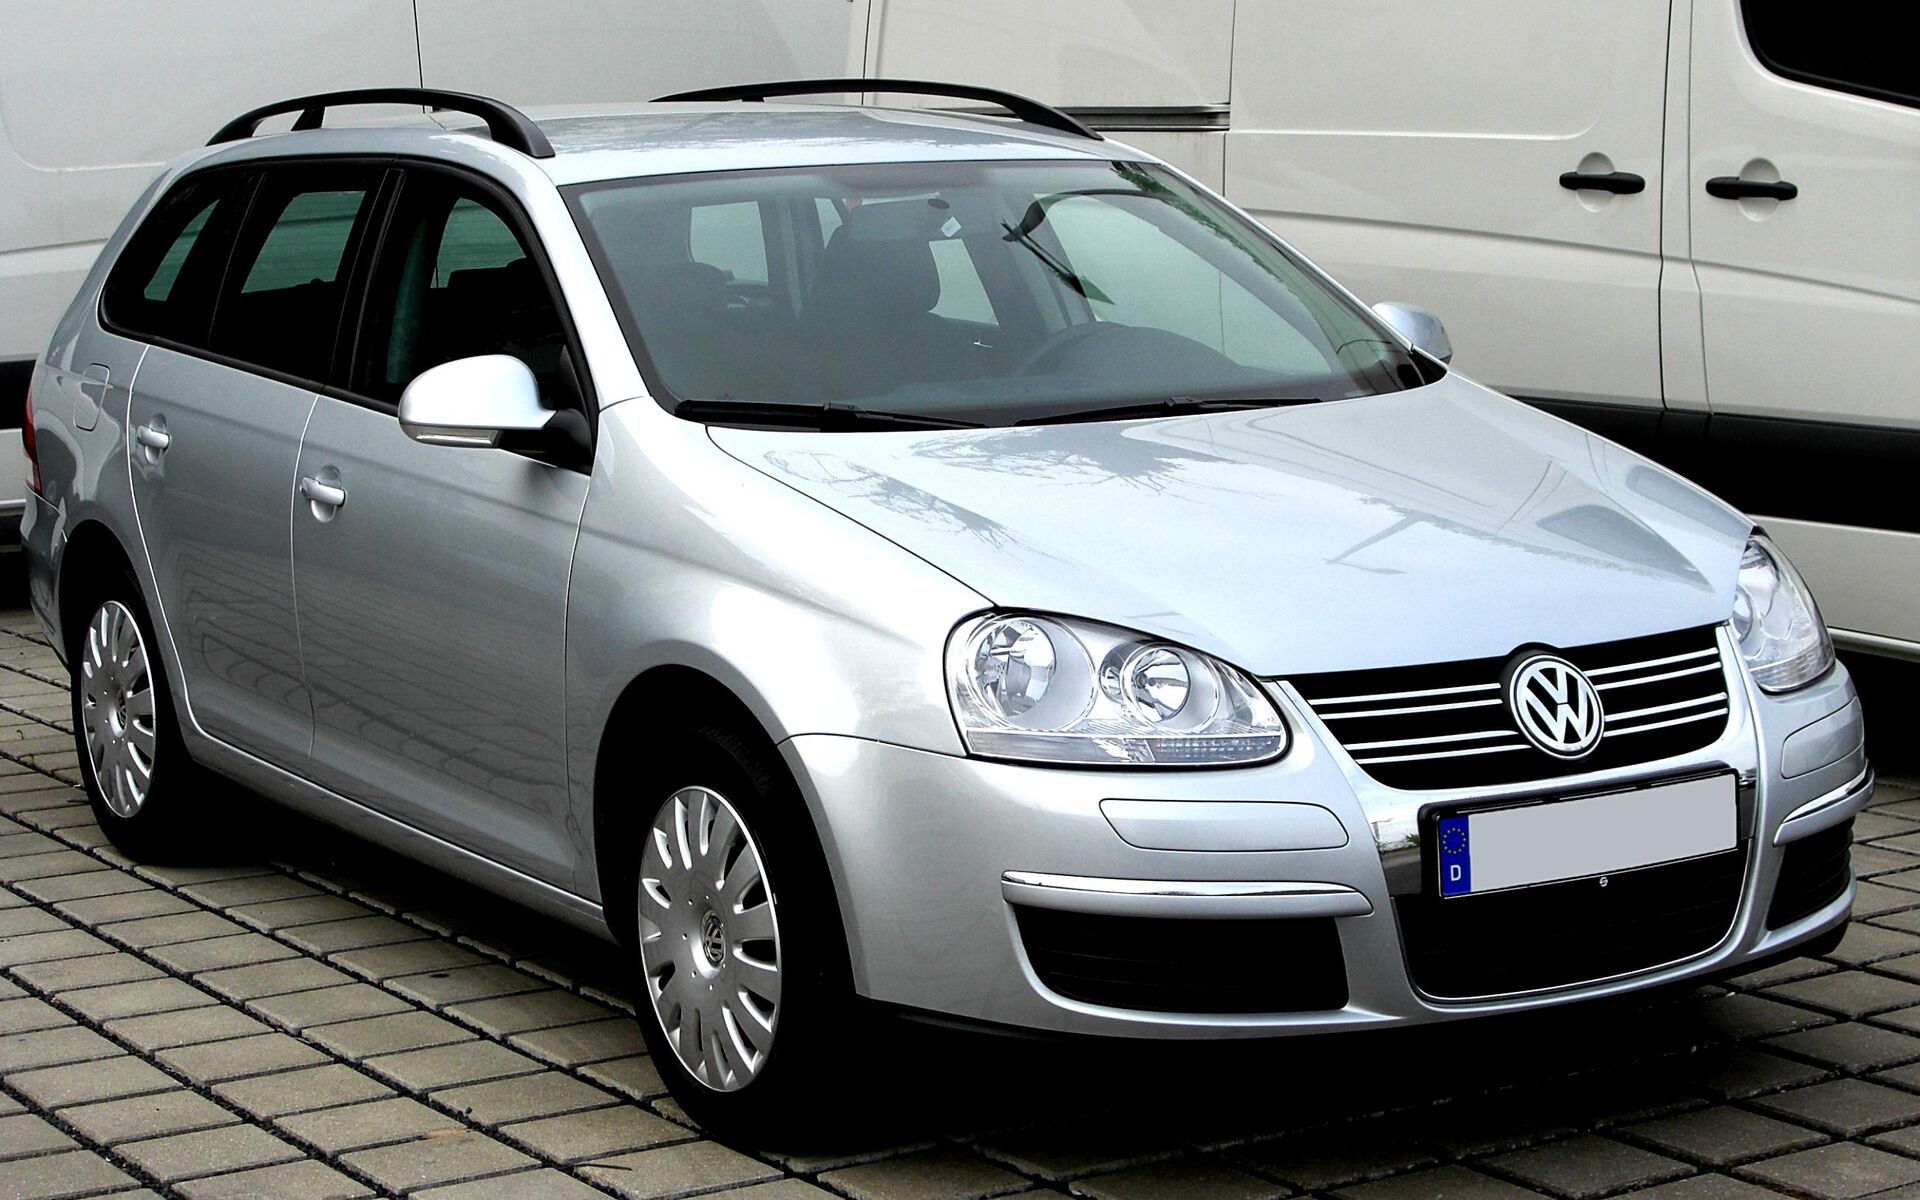 Volkswagen V 2.0 TDI (140 Hp) DSG 2007 - 2008 Specs and Technical Data, Fuel Consumption, Dimensions